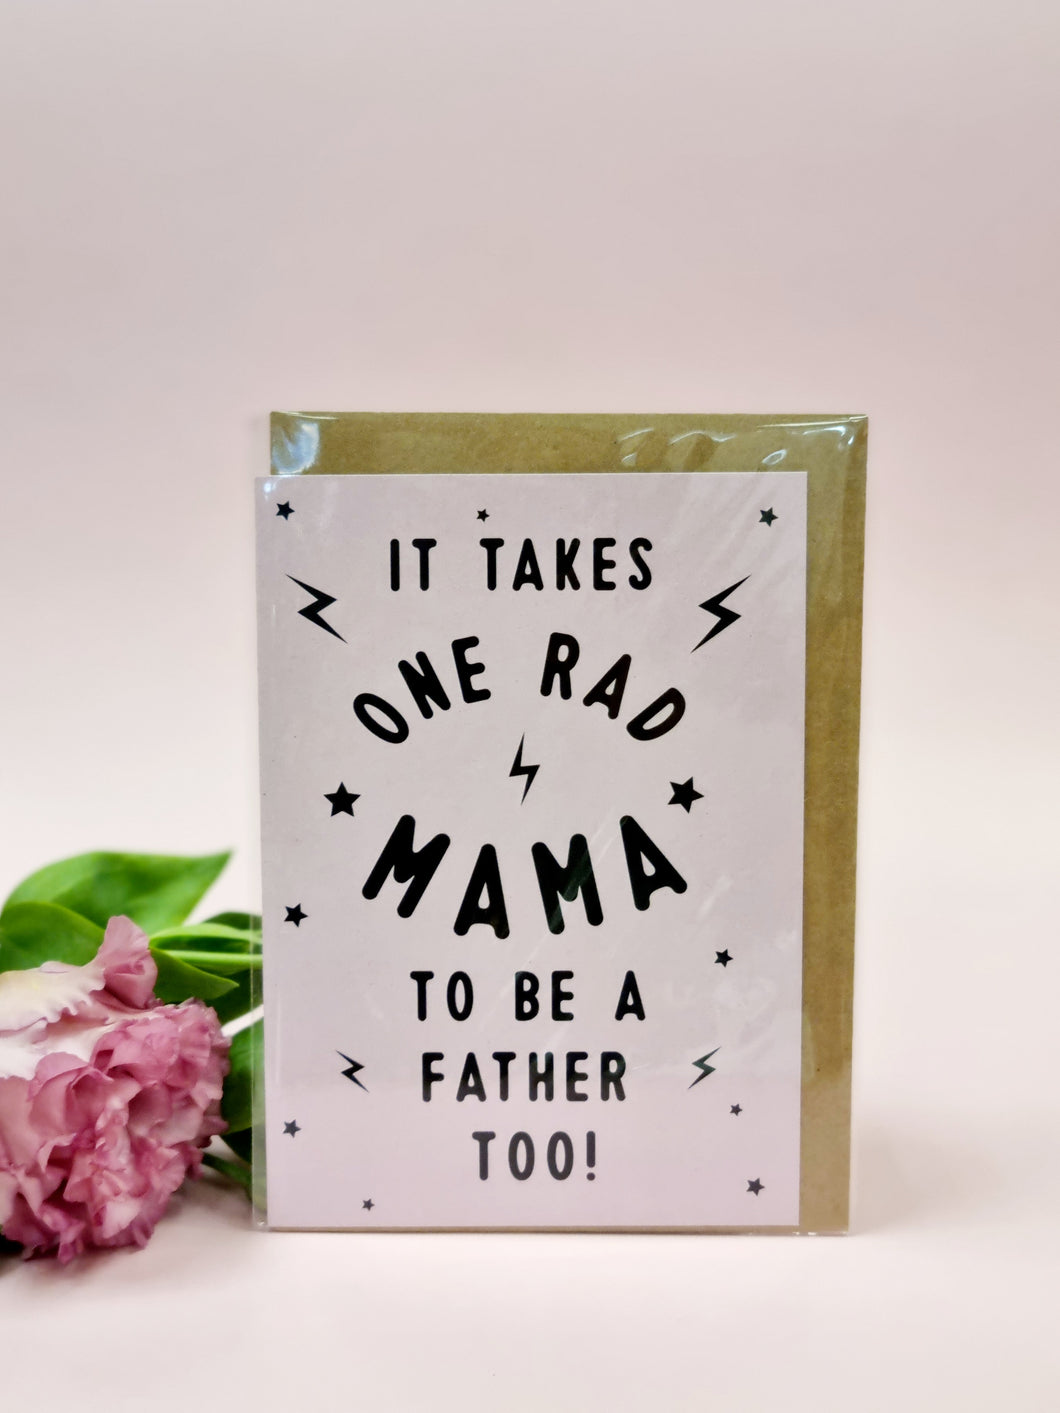 'One Rad Mama' card